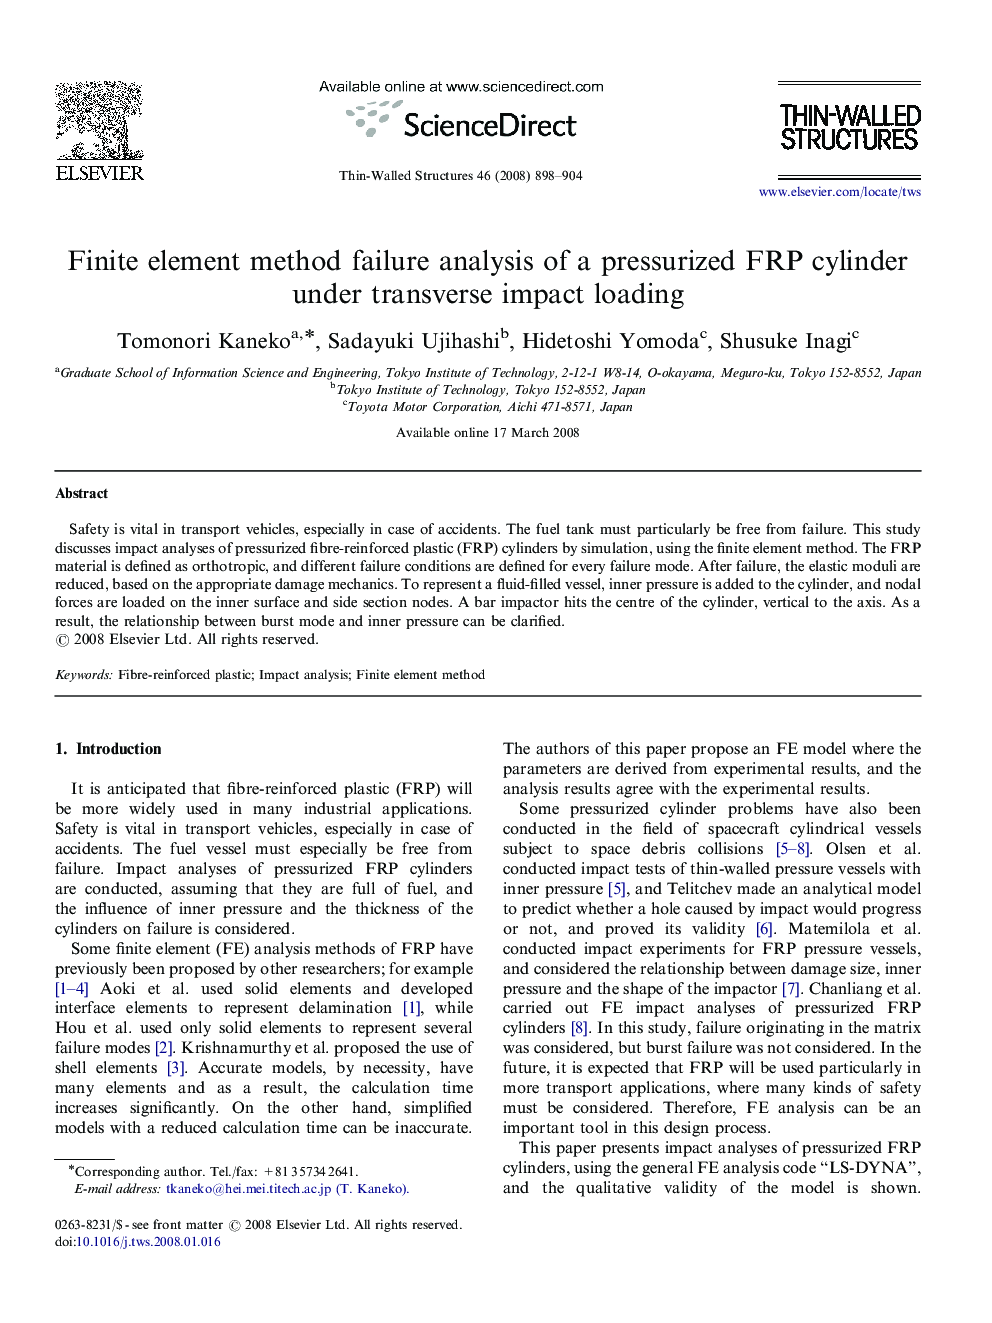 Finite element method failure analysis of a pressurized FRP cylinder under transverse impact loading